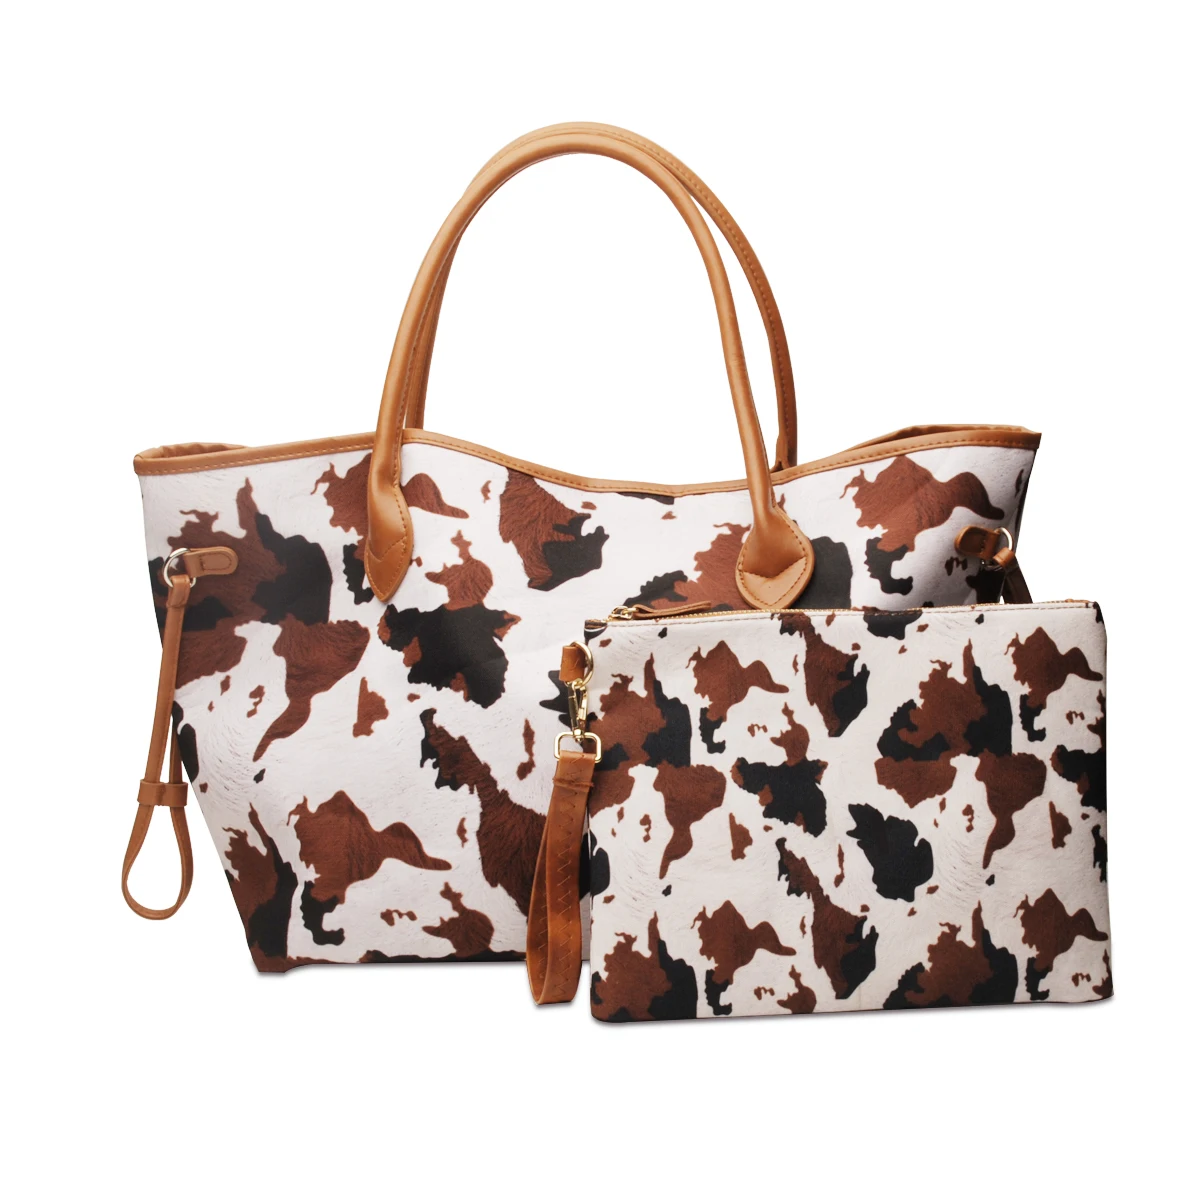 

DOMIL New 3D Cow Print Tote Bags Weekender Travel Shopping Handbags Large Monogram Purse for Women Ladies